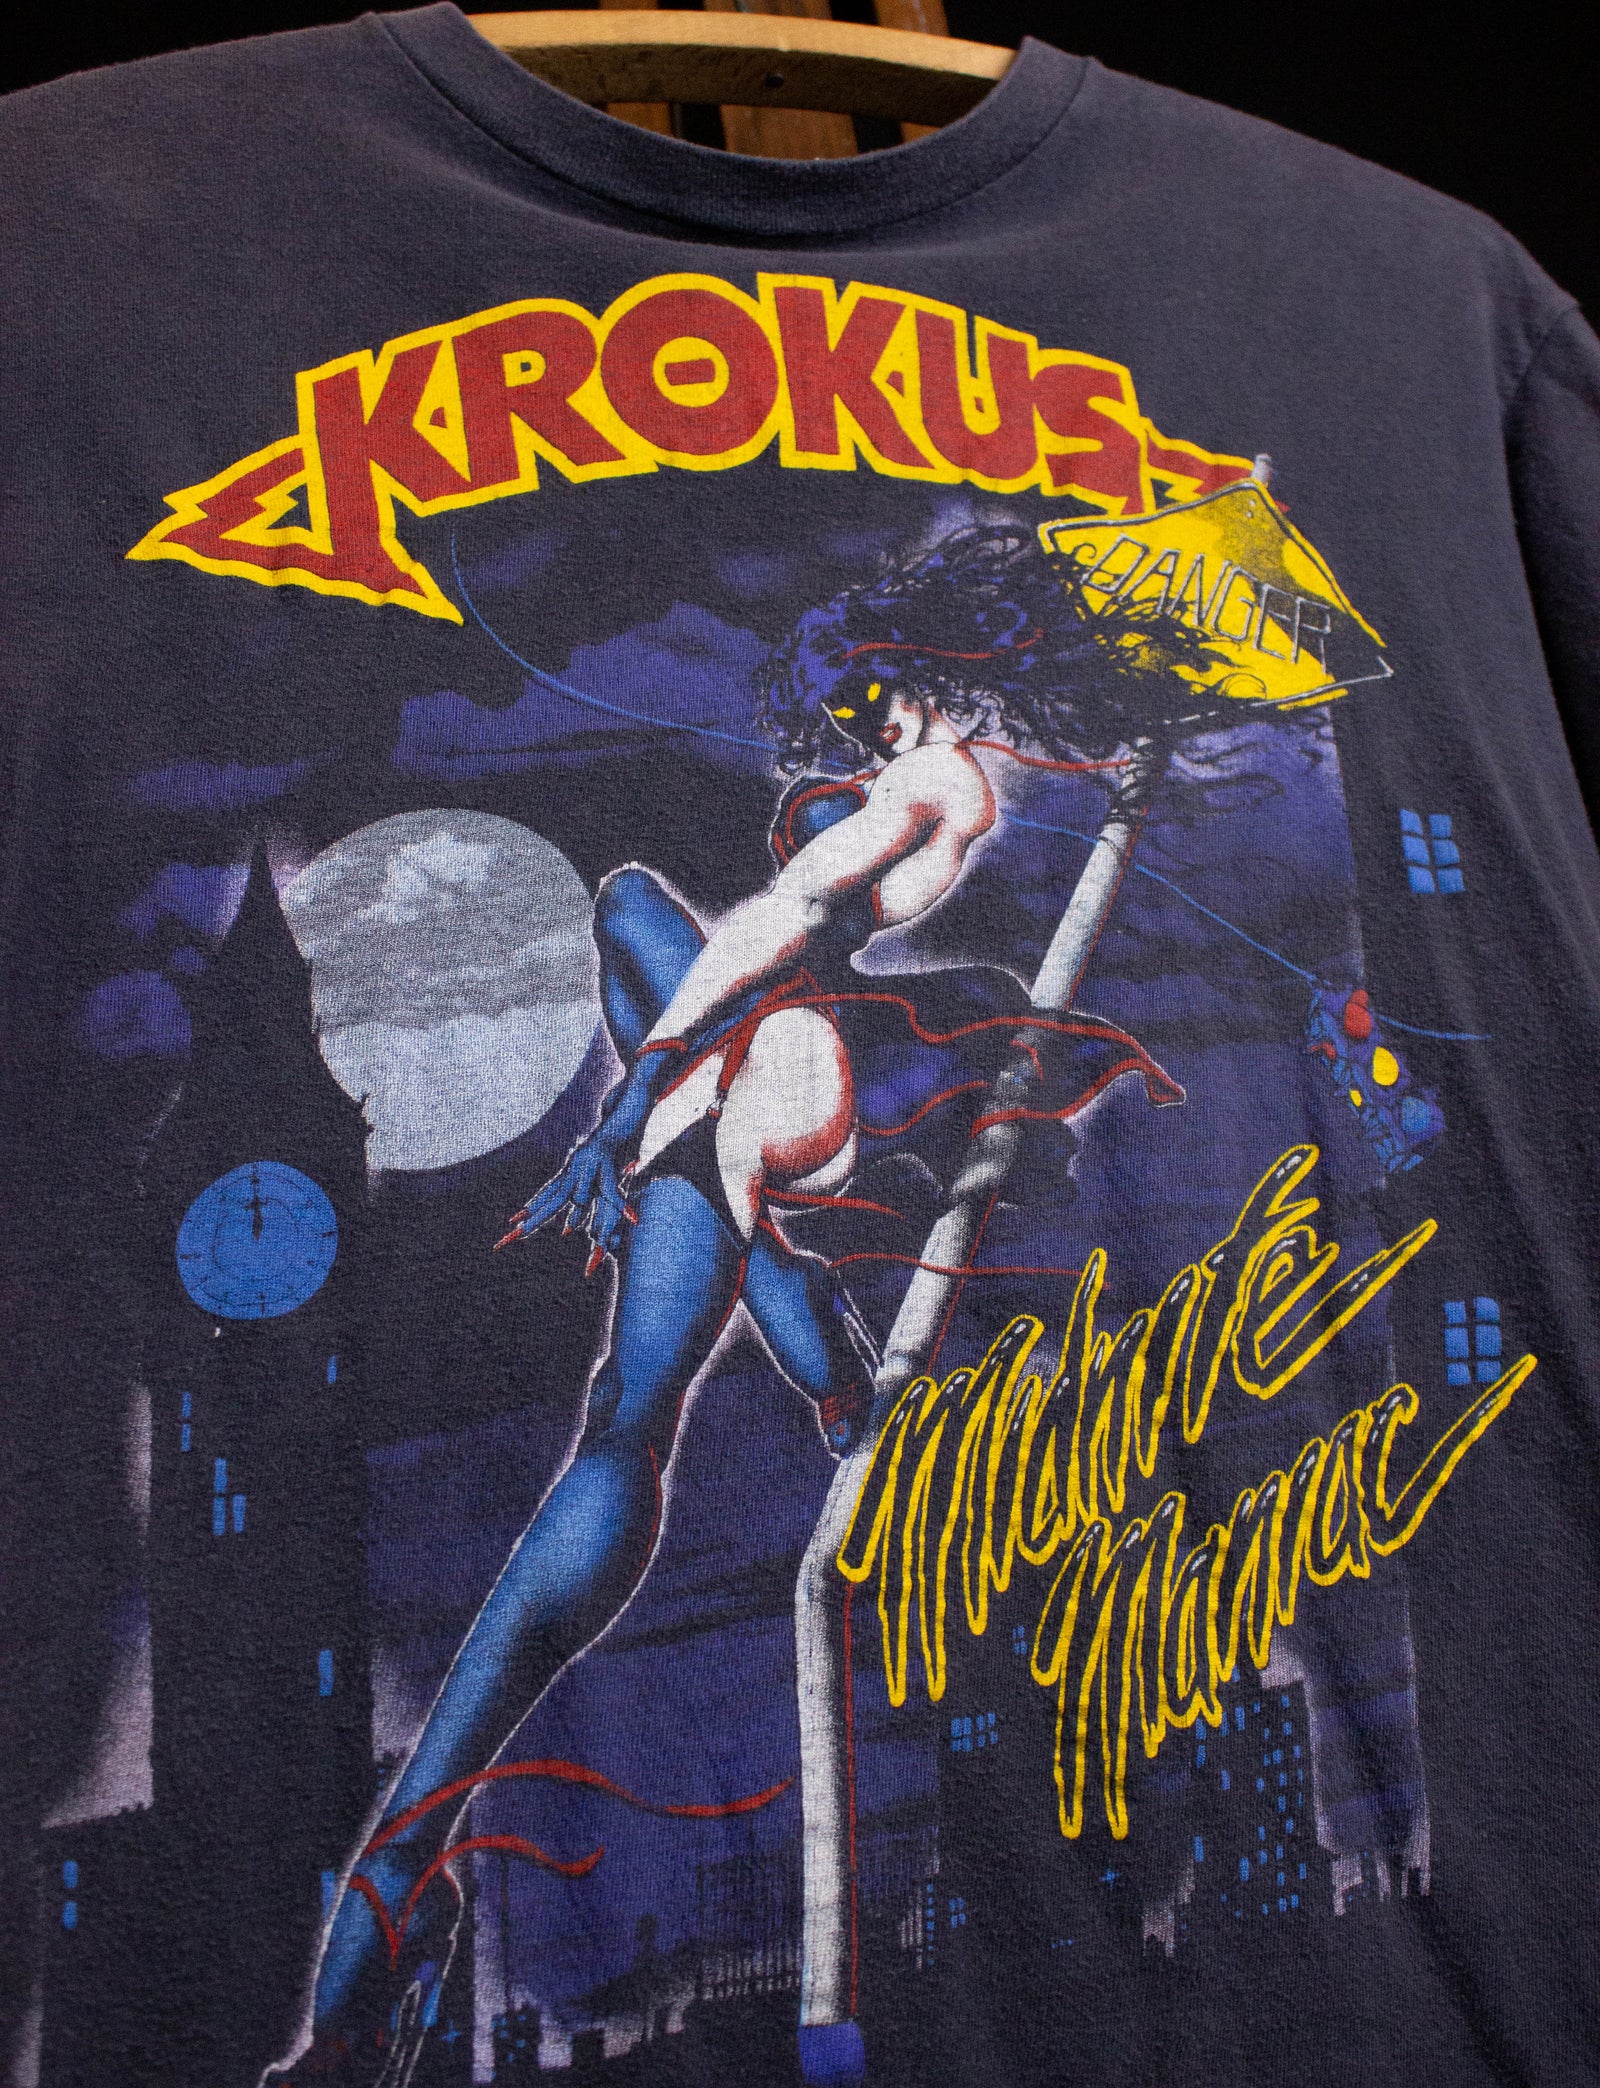 Vintage 1984/1985 Krokus "Midnite Maniac" Blitz Tour Concert T Shirt Small